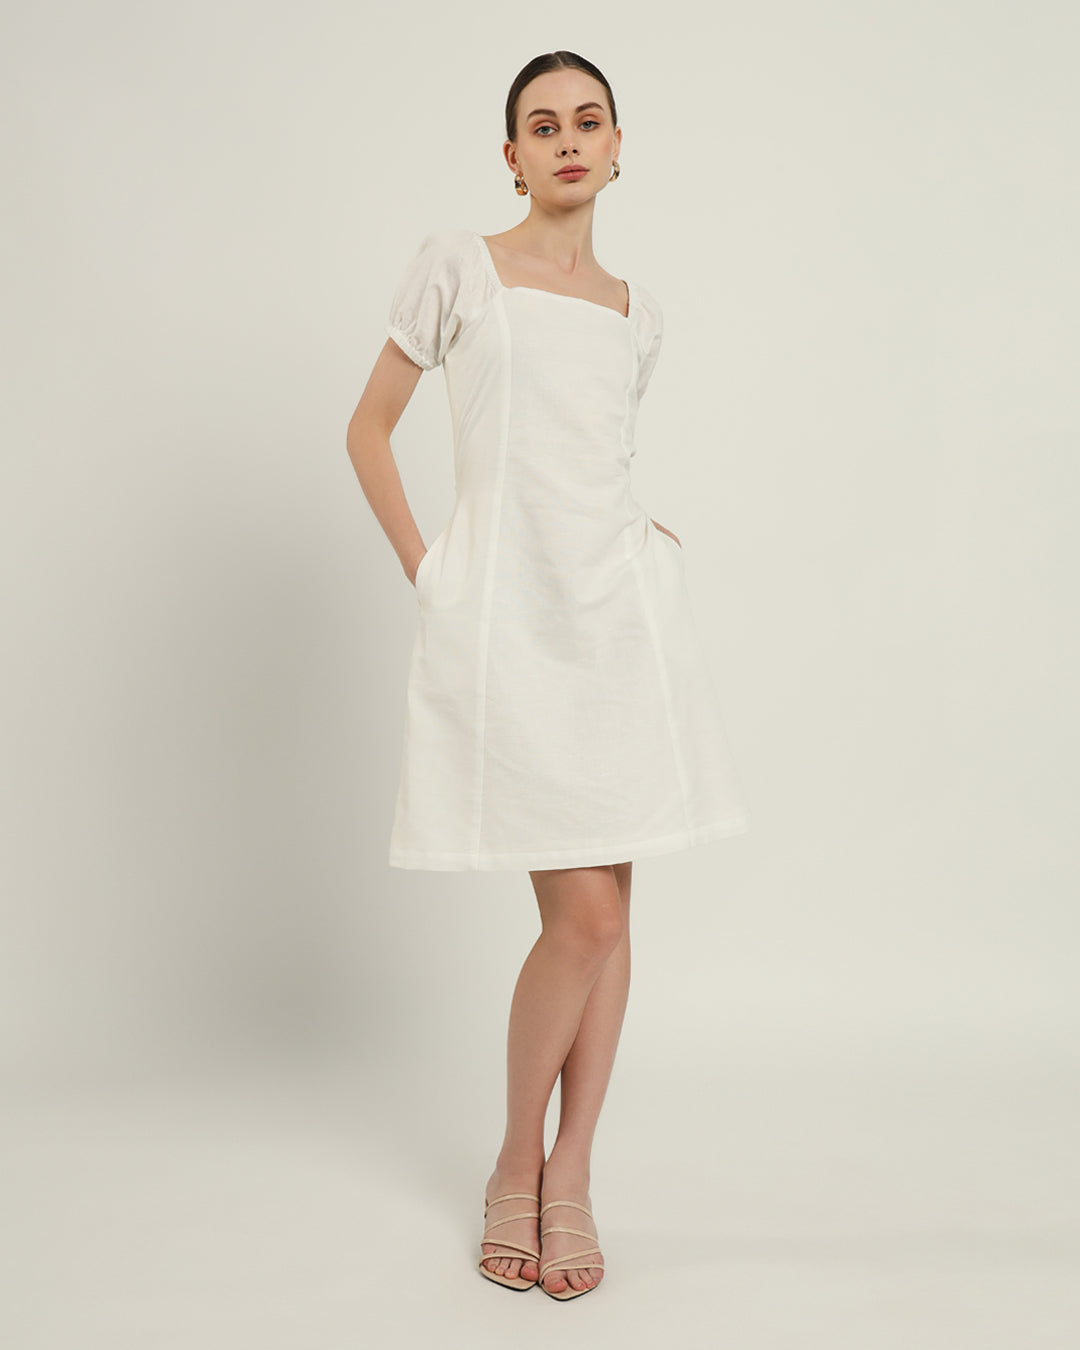 The Arar Daisy White Linen Dress